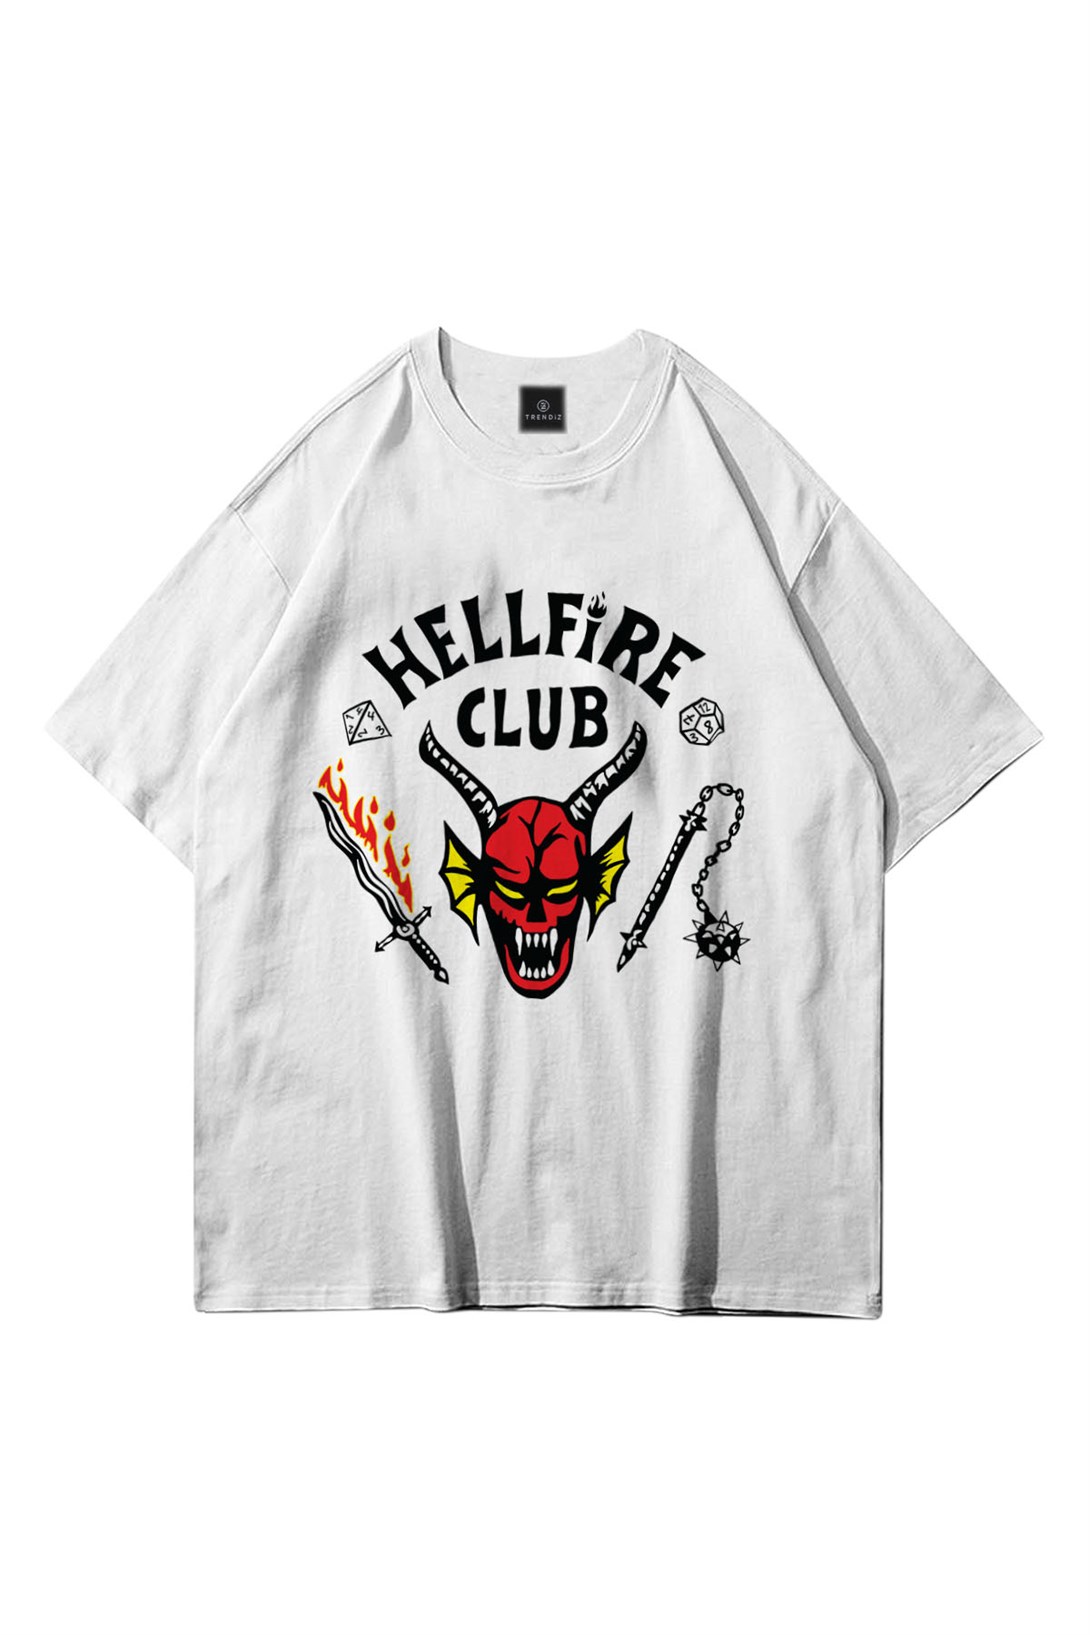 Trendiz Unisex Hell Fire Club Tshirt Beyaz